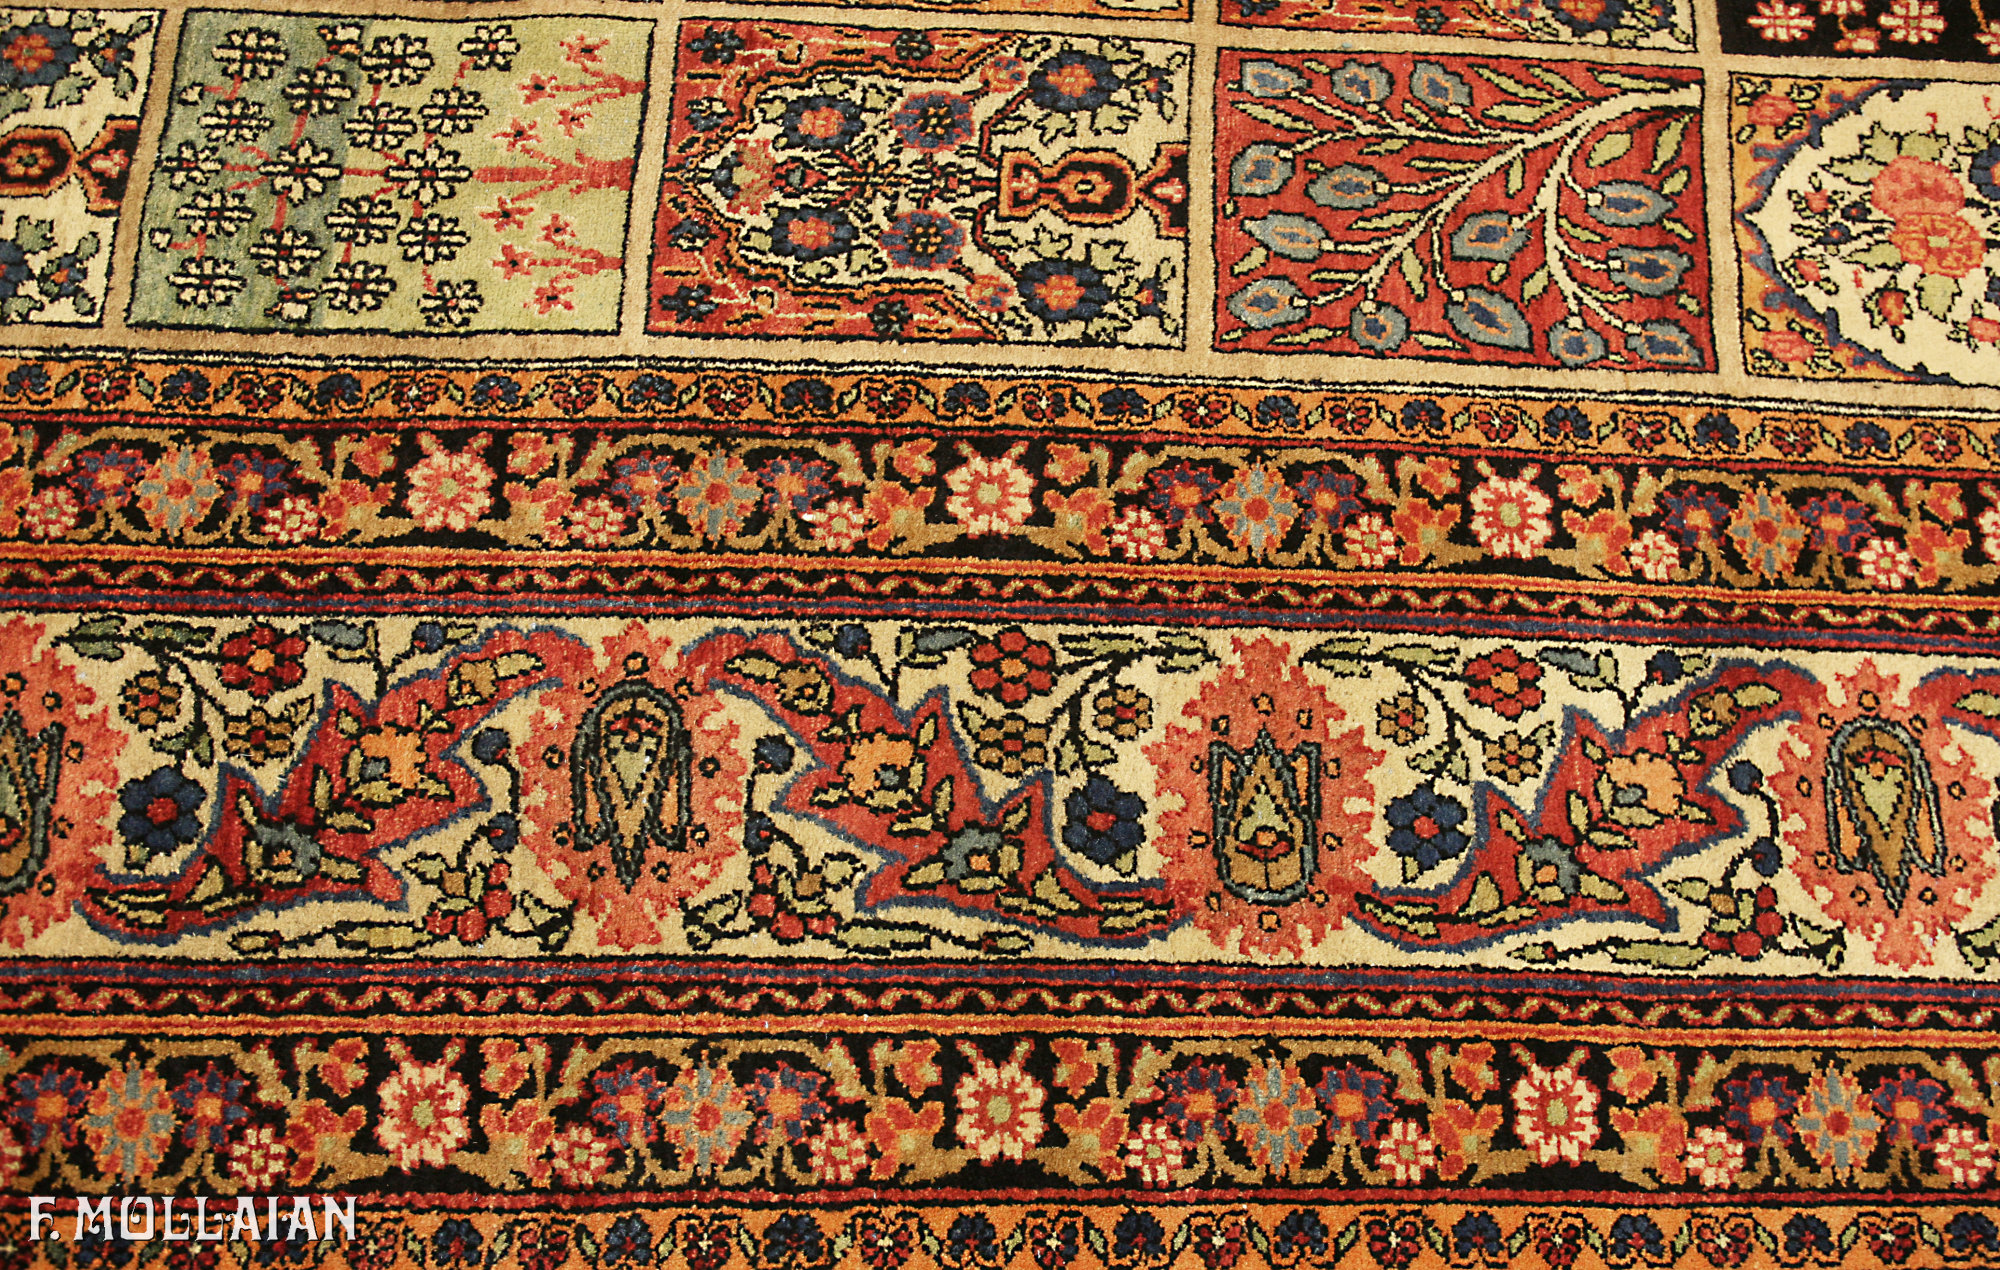 Teppich Persischer Antiker Isfahan n°:72609780